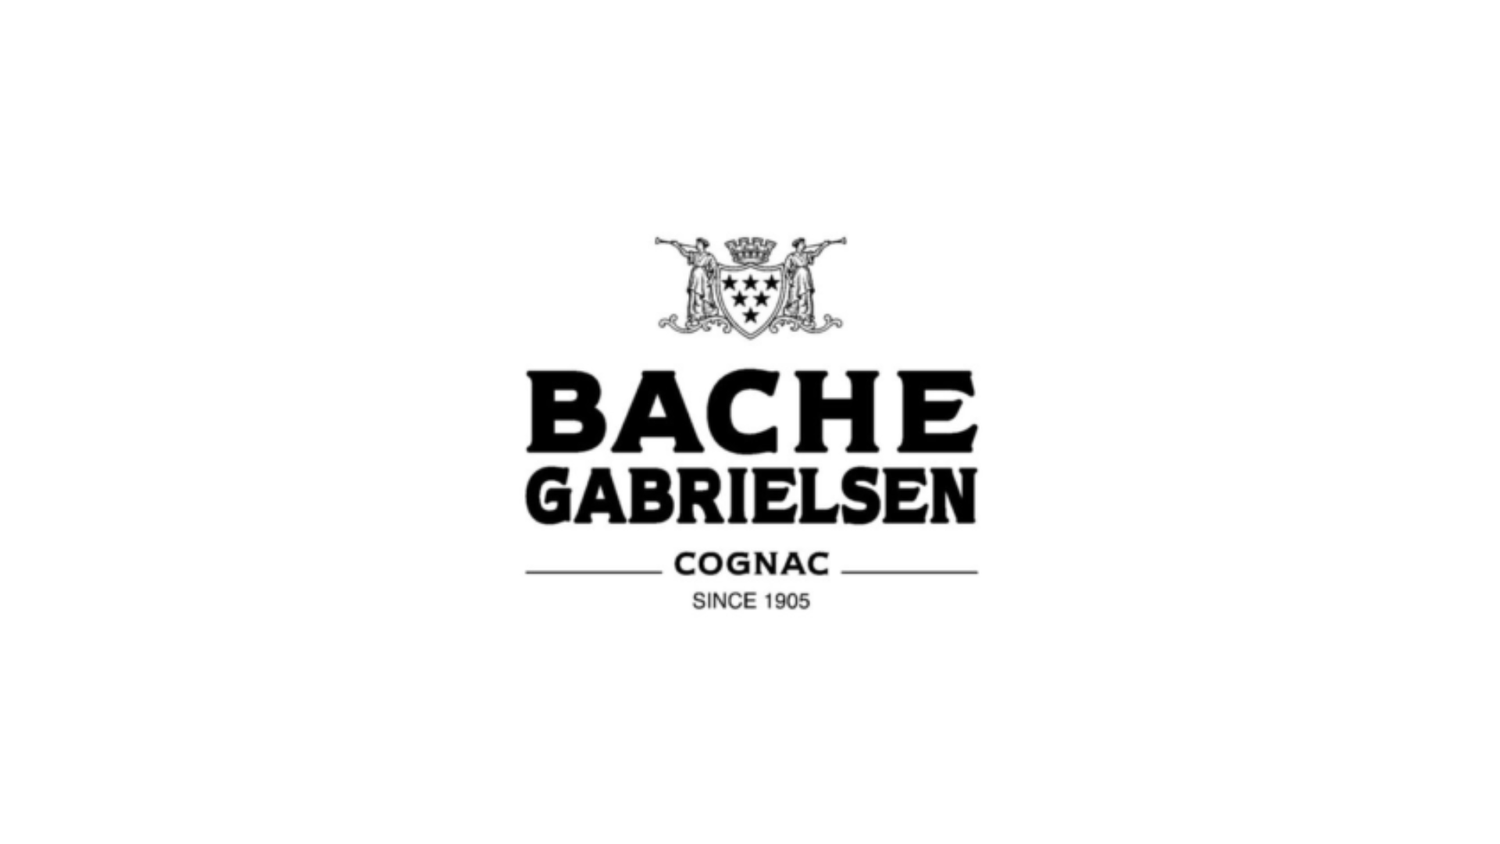 Bache-Gabrielsen